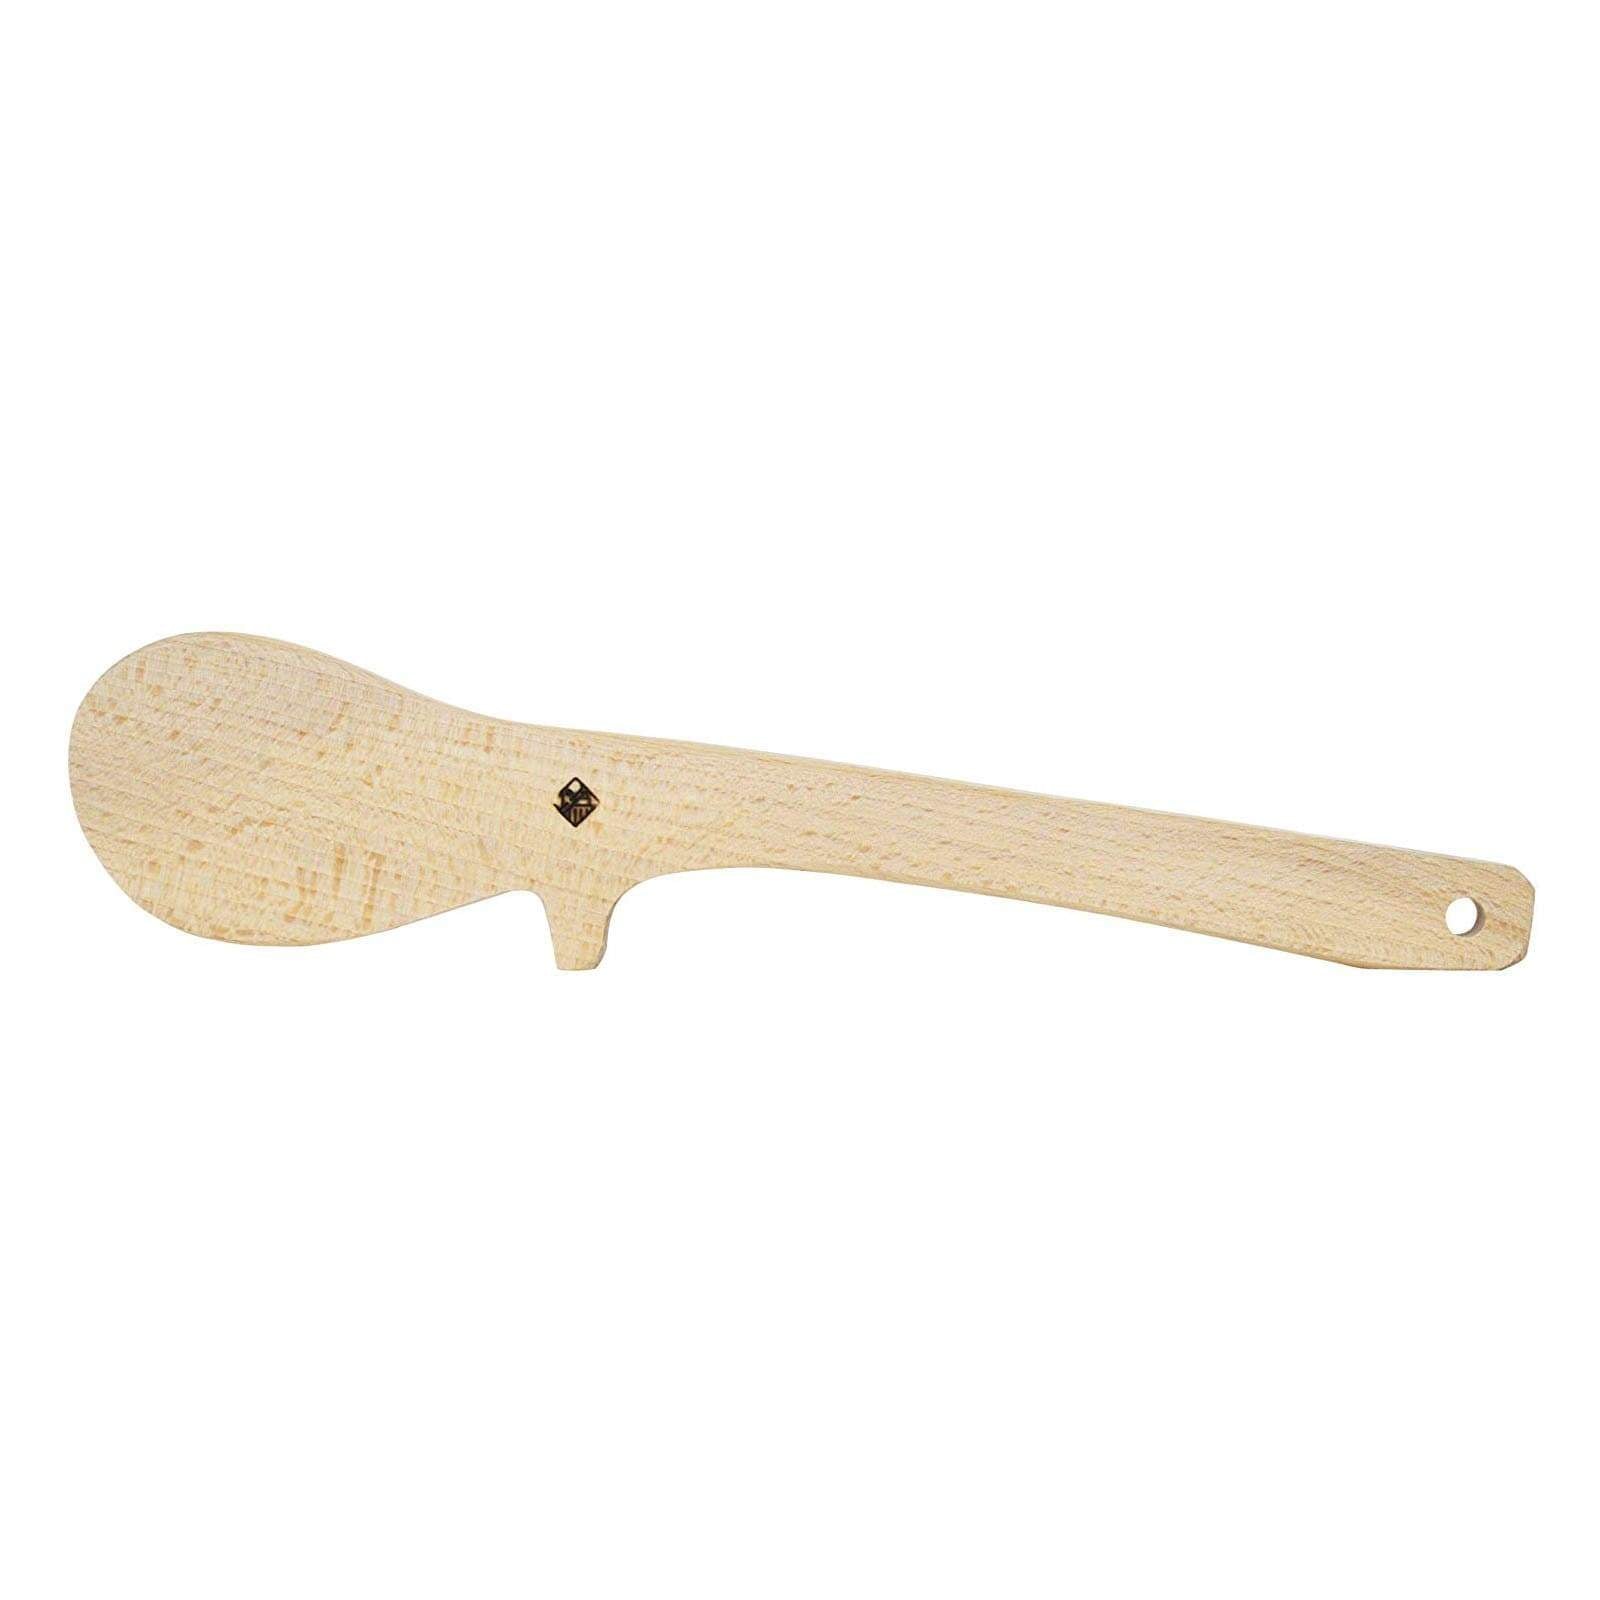 https://cdn.shopify.com/s/files/1/1610/3863/products/miranda-style-omoeraku-handcrafted-japanese-beech-wood-spatula-spatulas-6971136704595_1600x.jpg?v=1564049278